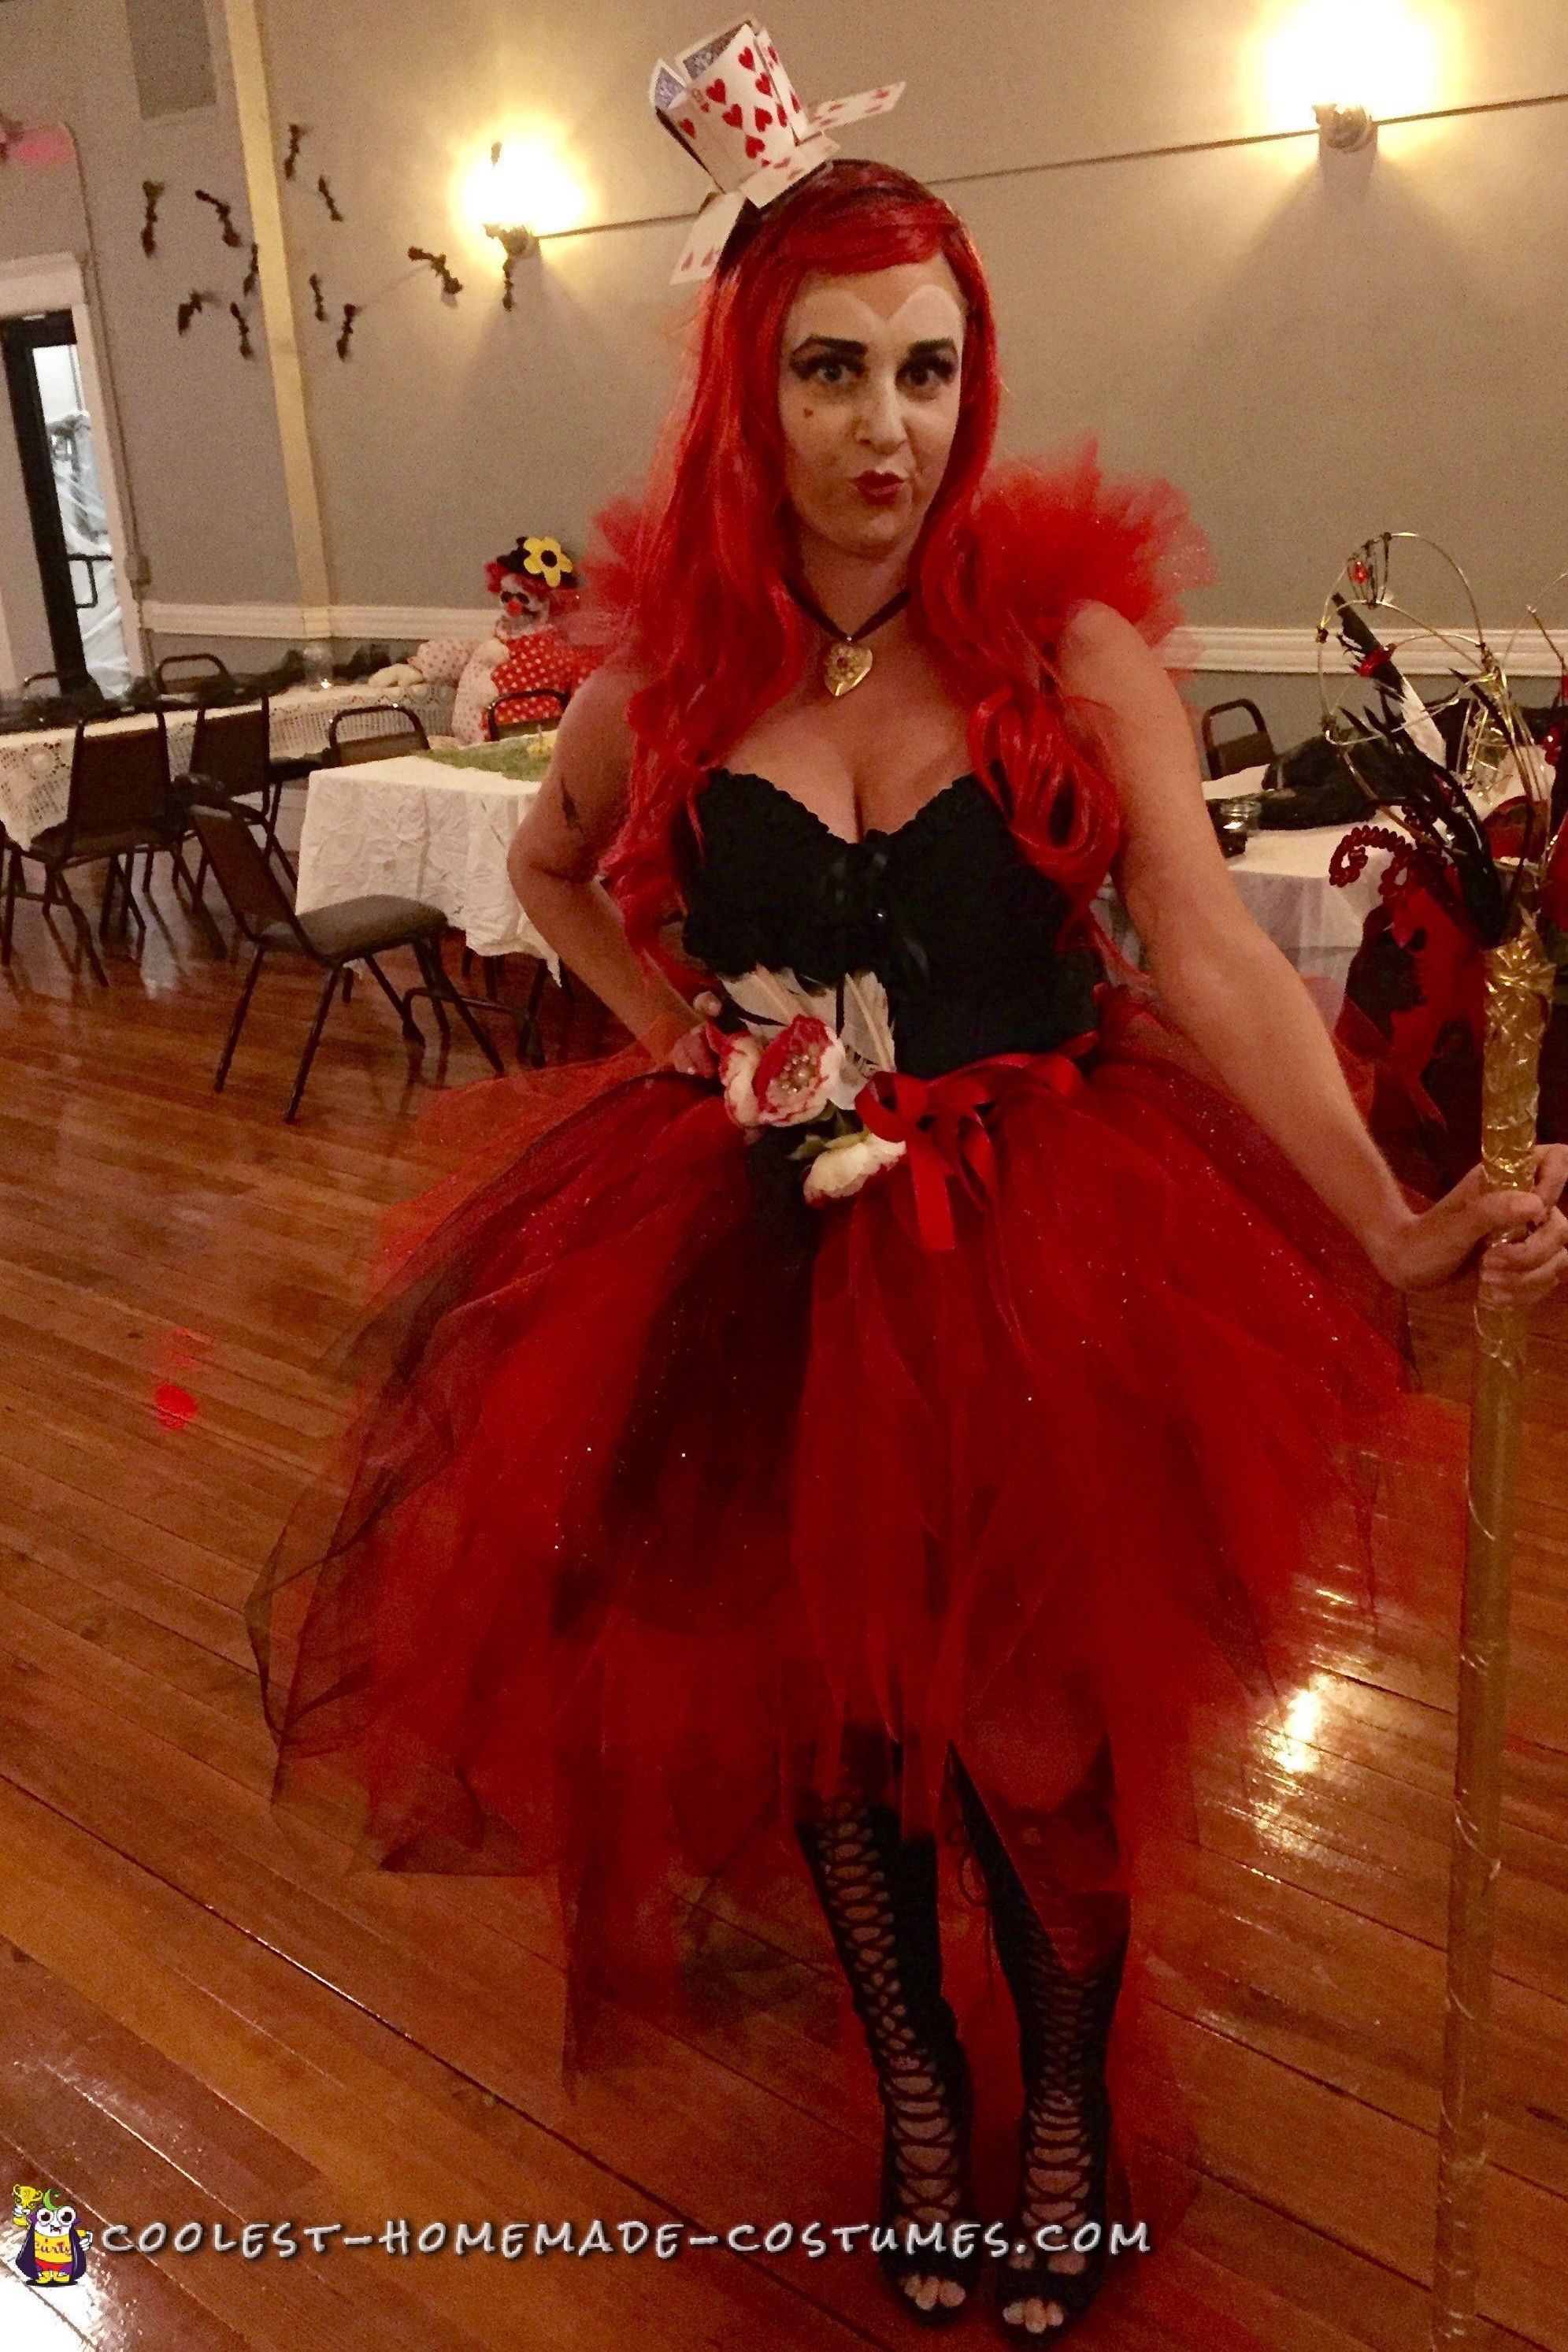 40+ Impressive DIY Queen of Hearts and Red Queen Costumes